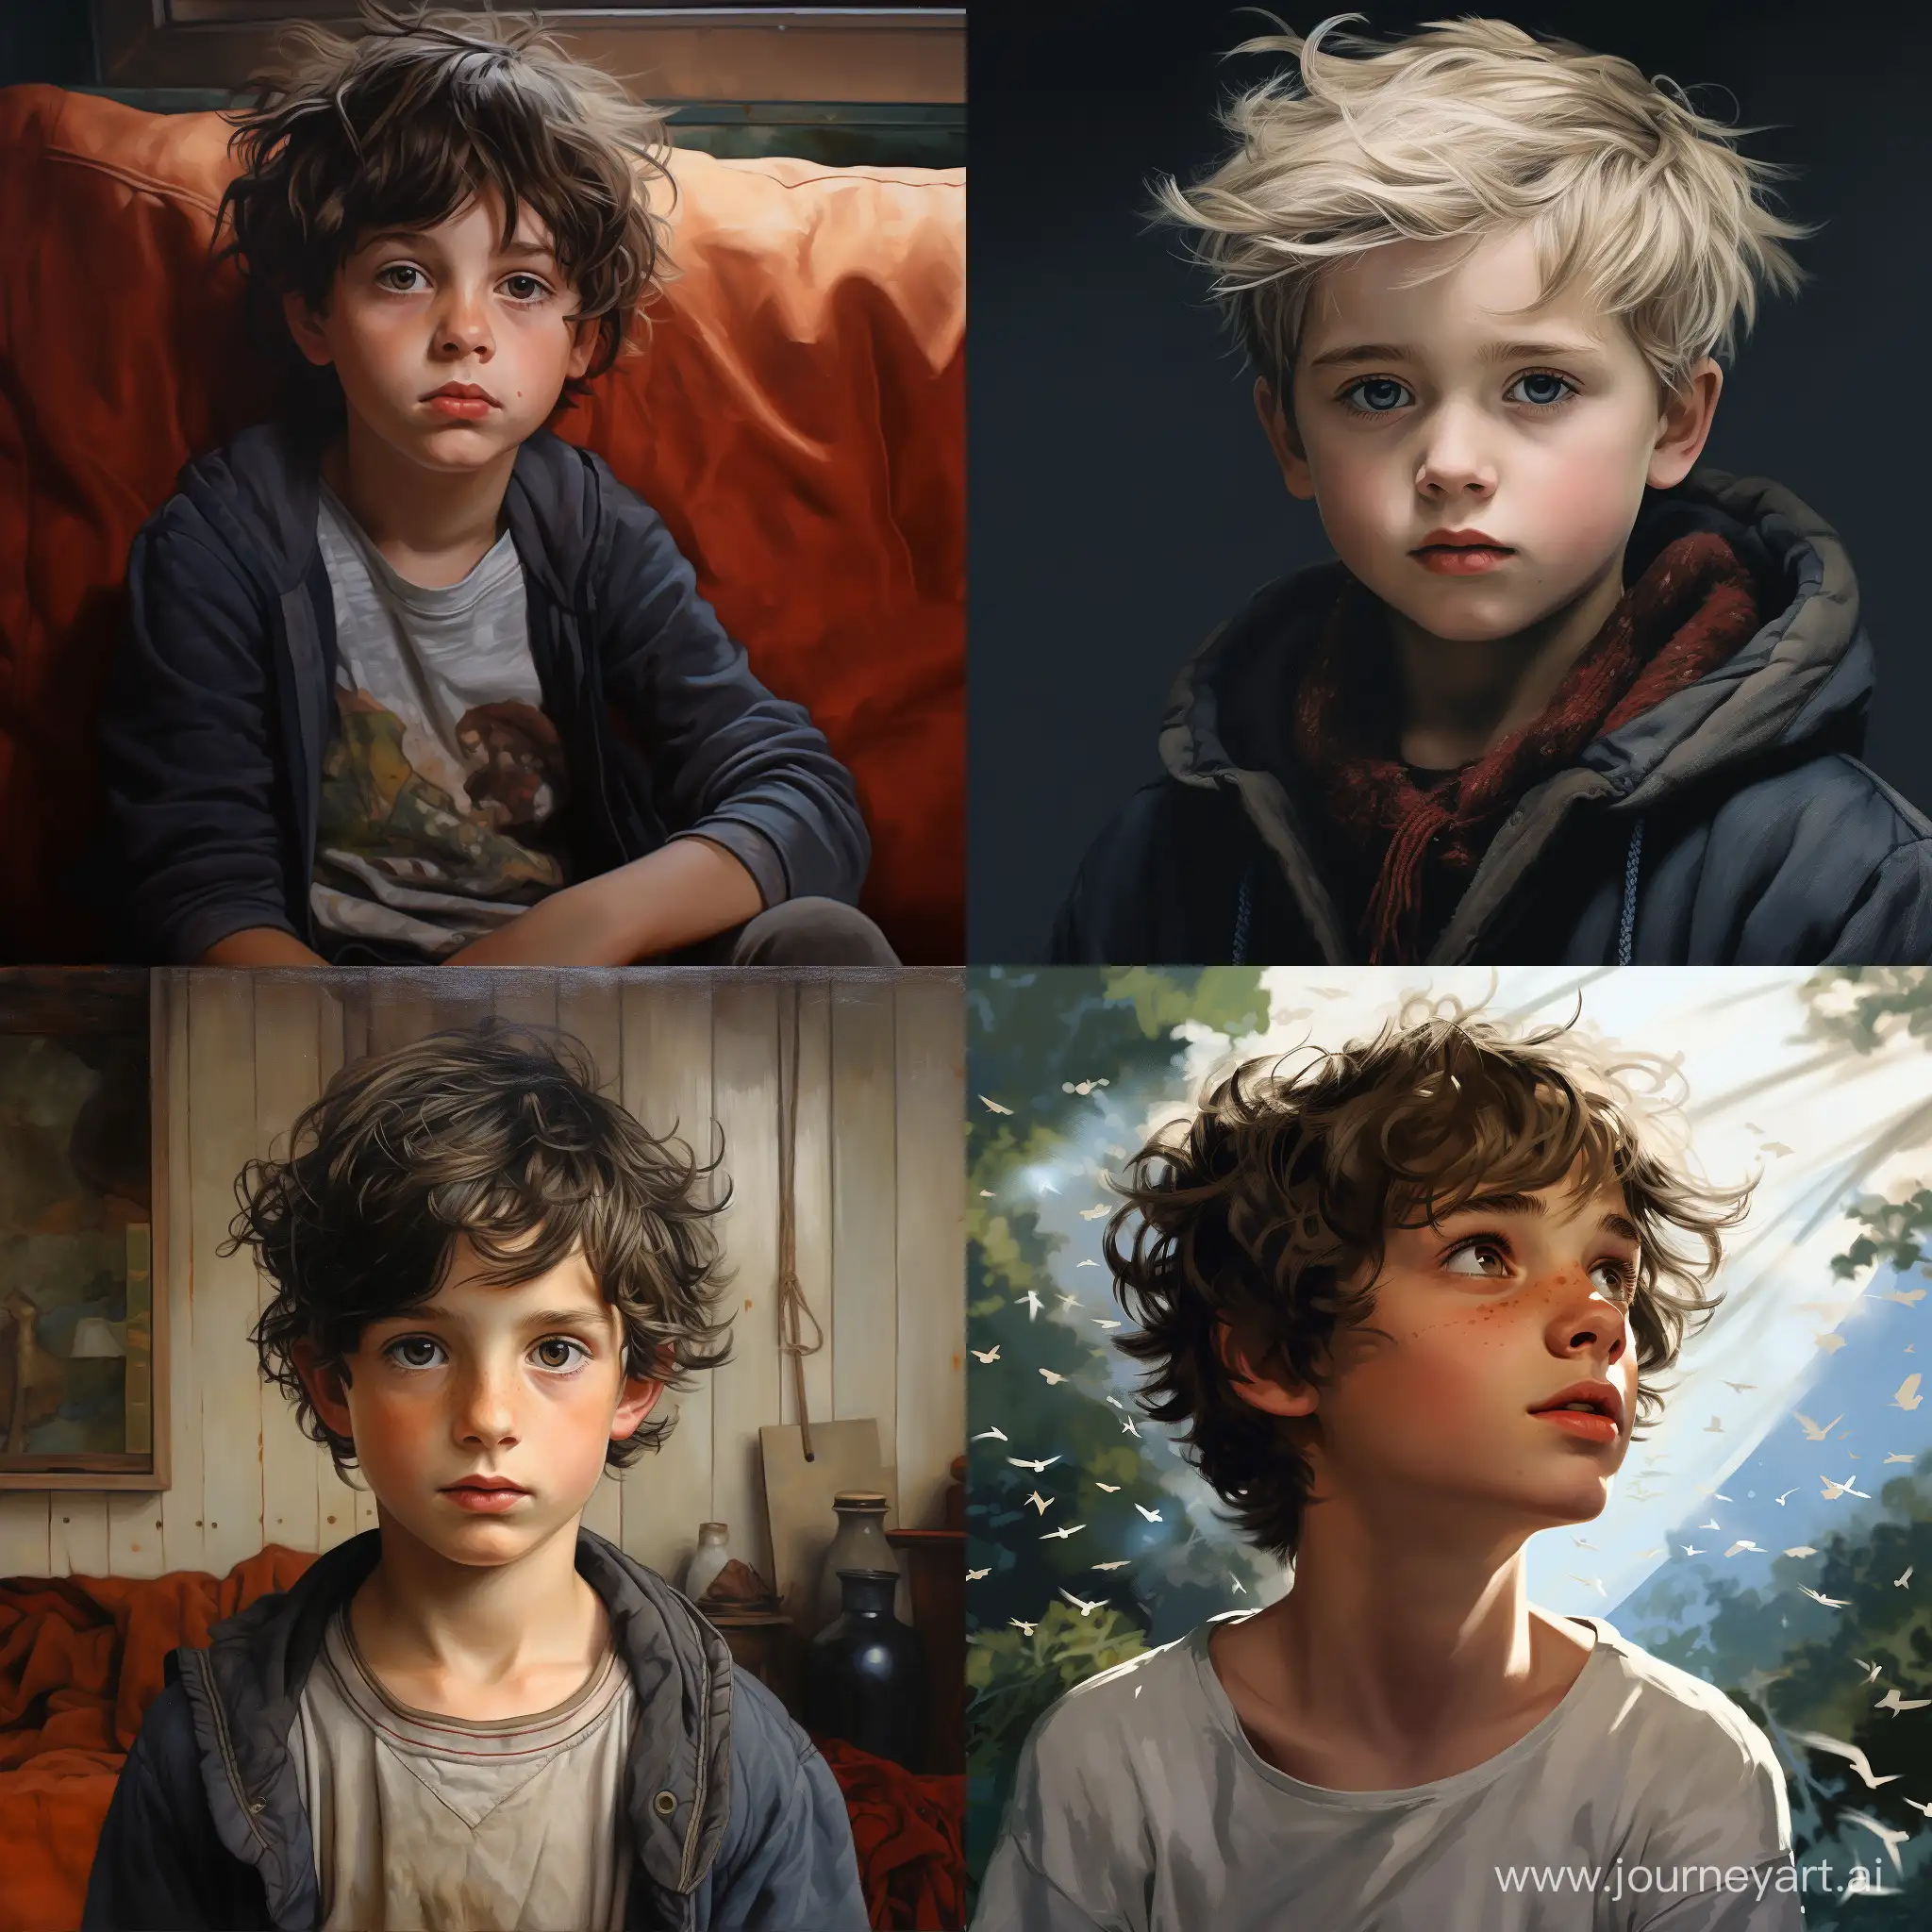 Playful-Boy-Portrait-in-Artistic-11-Aspect-Ratio